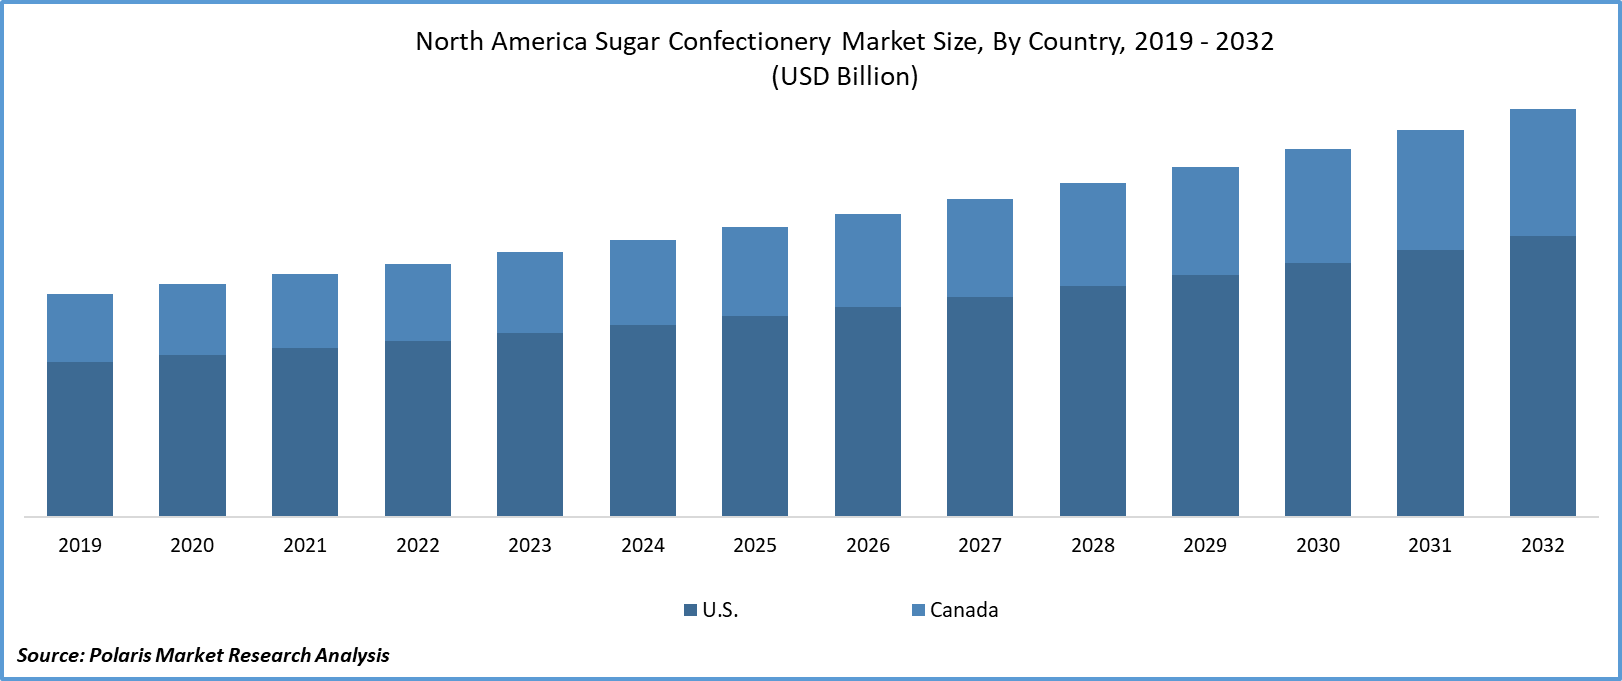 North America Sugar Confectionery Market Size